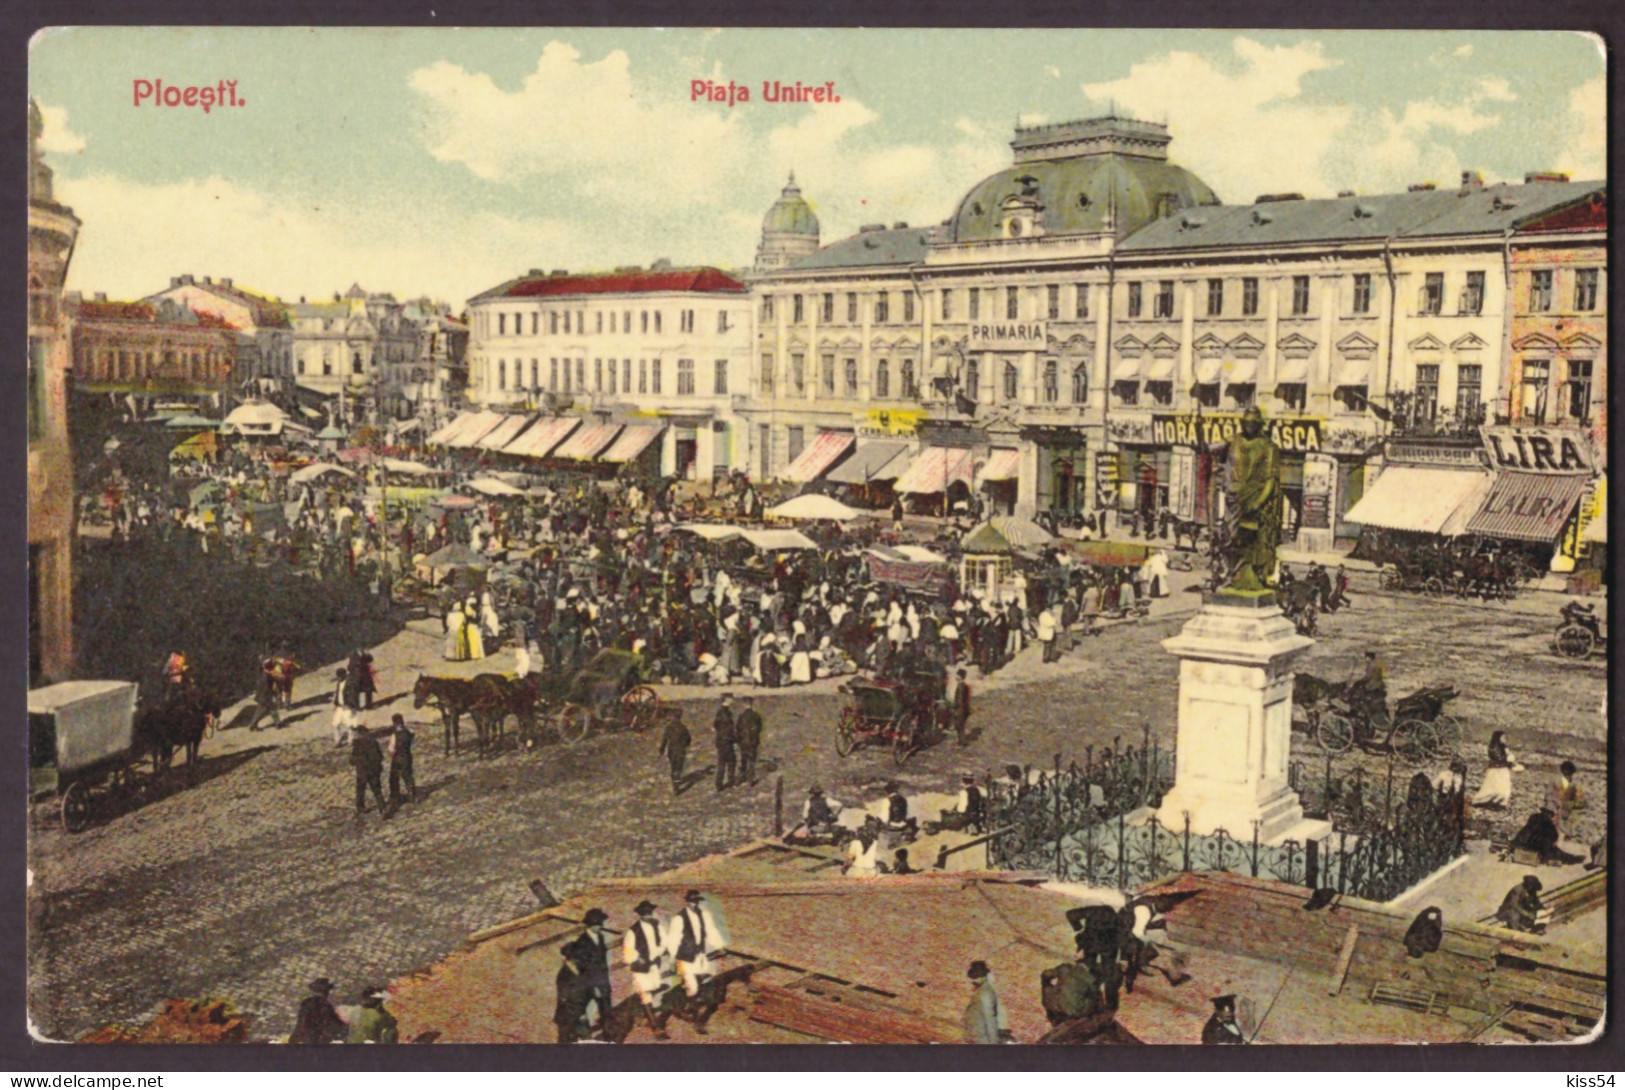 RO 94 - 22911 PLOIESTI, Market, Romania - Old Postcard - Used - 1911 - Romania